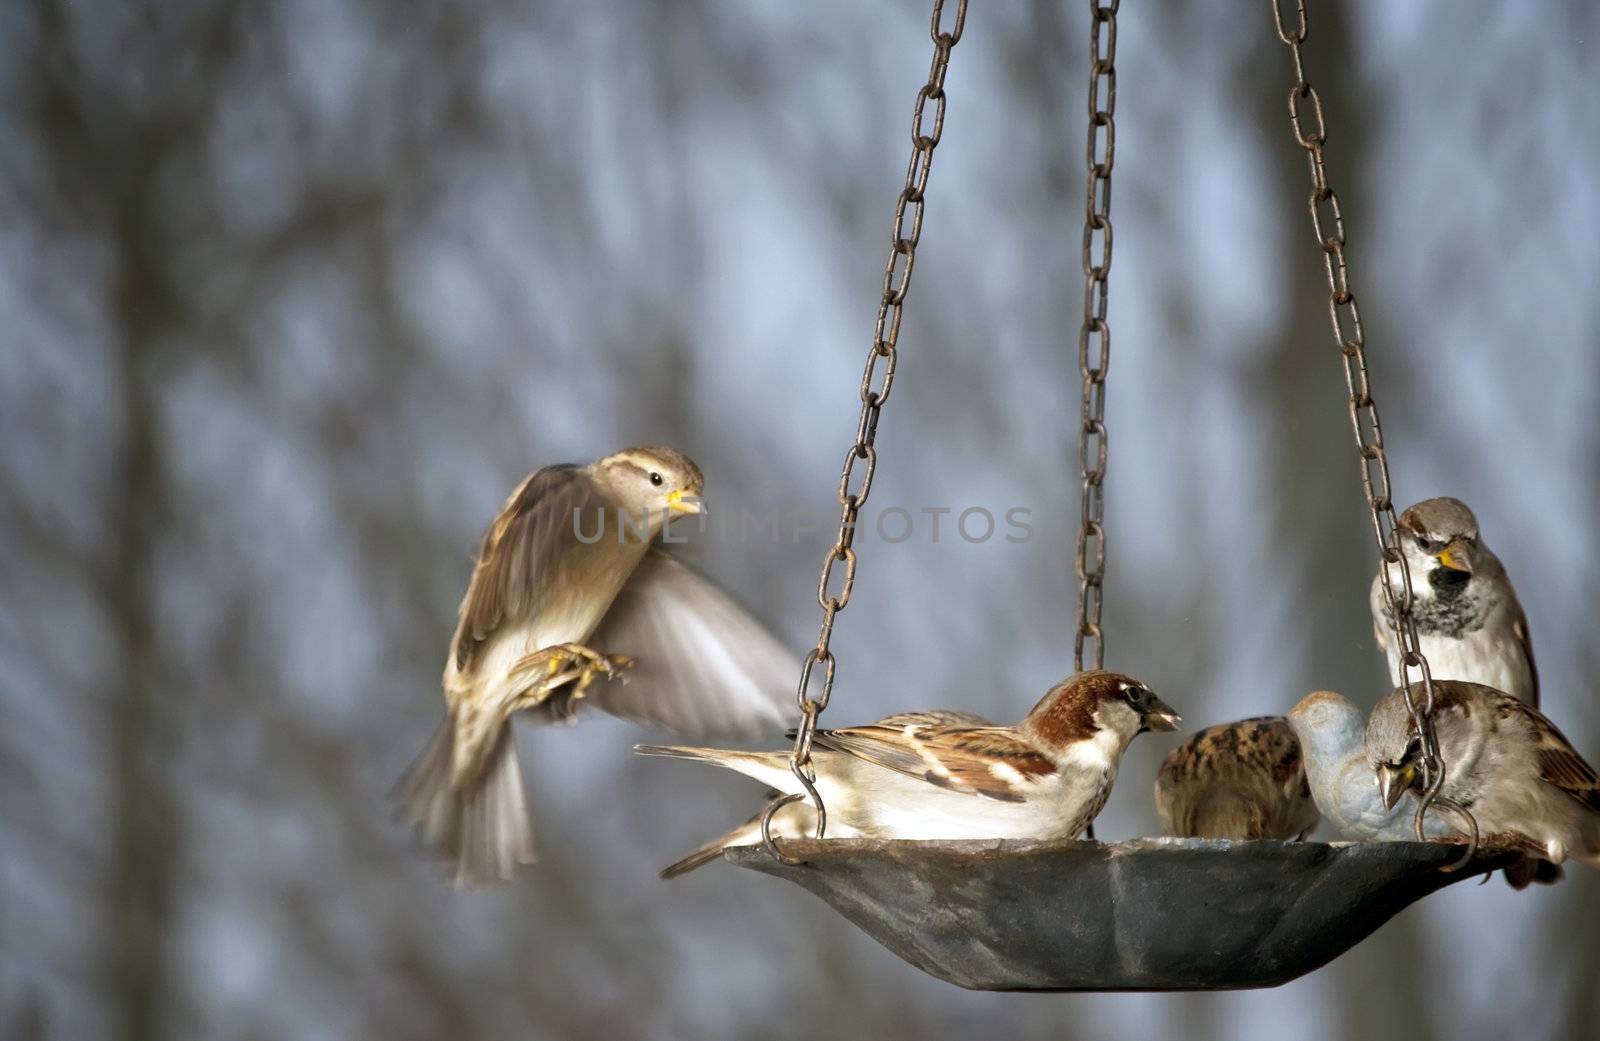 Five sparrows share a bird feeder during a snow storm